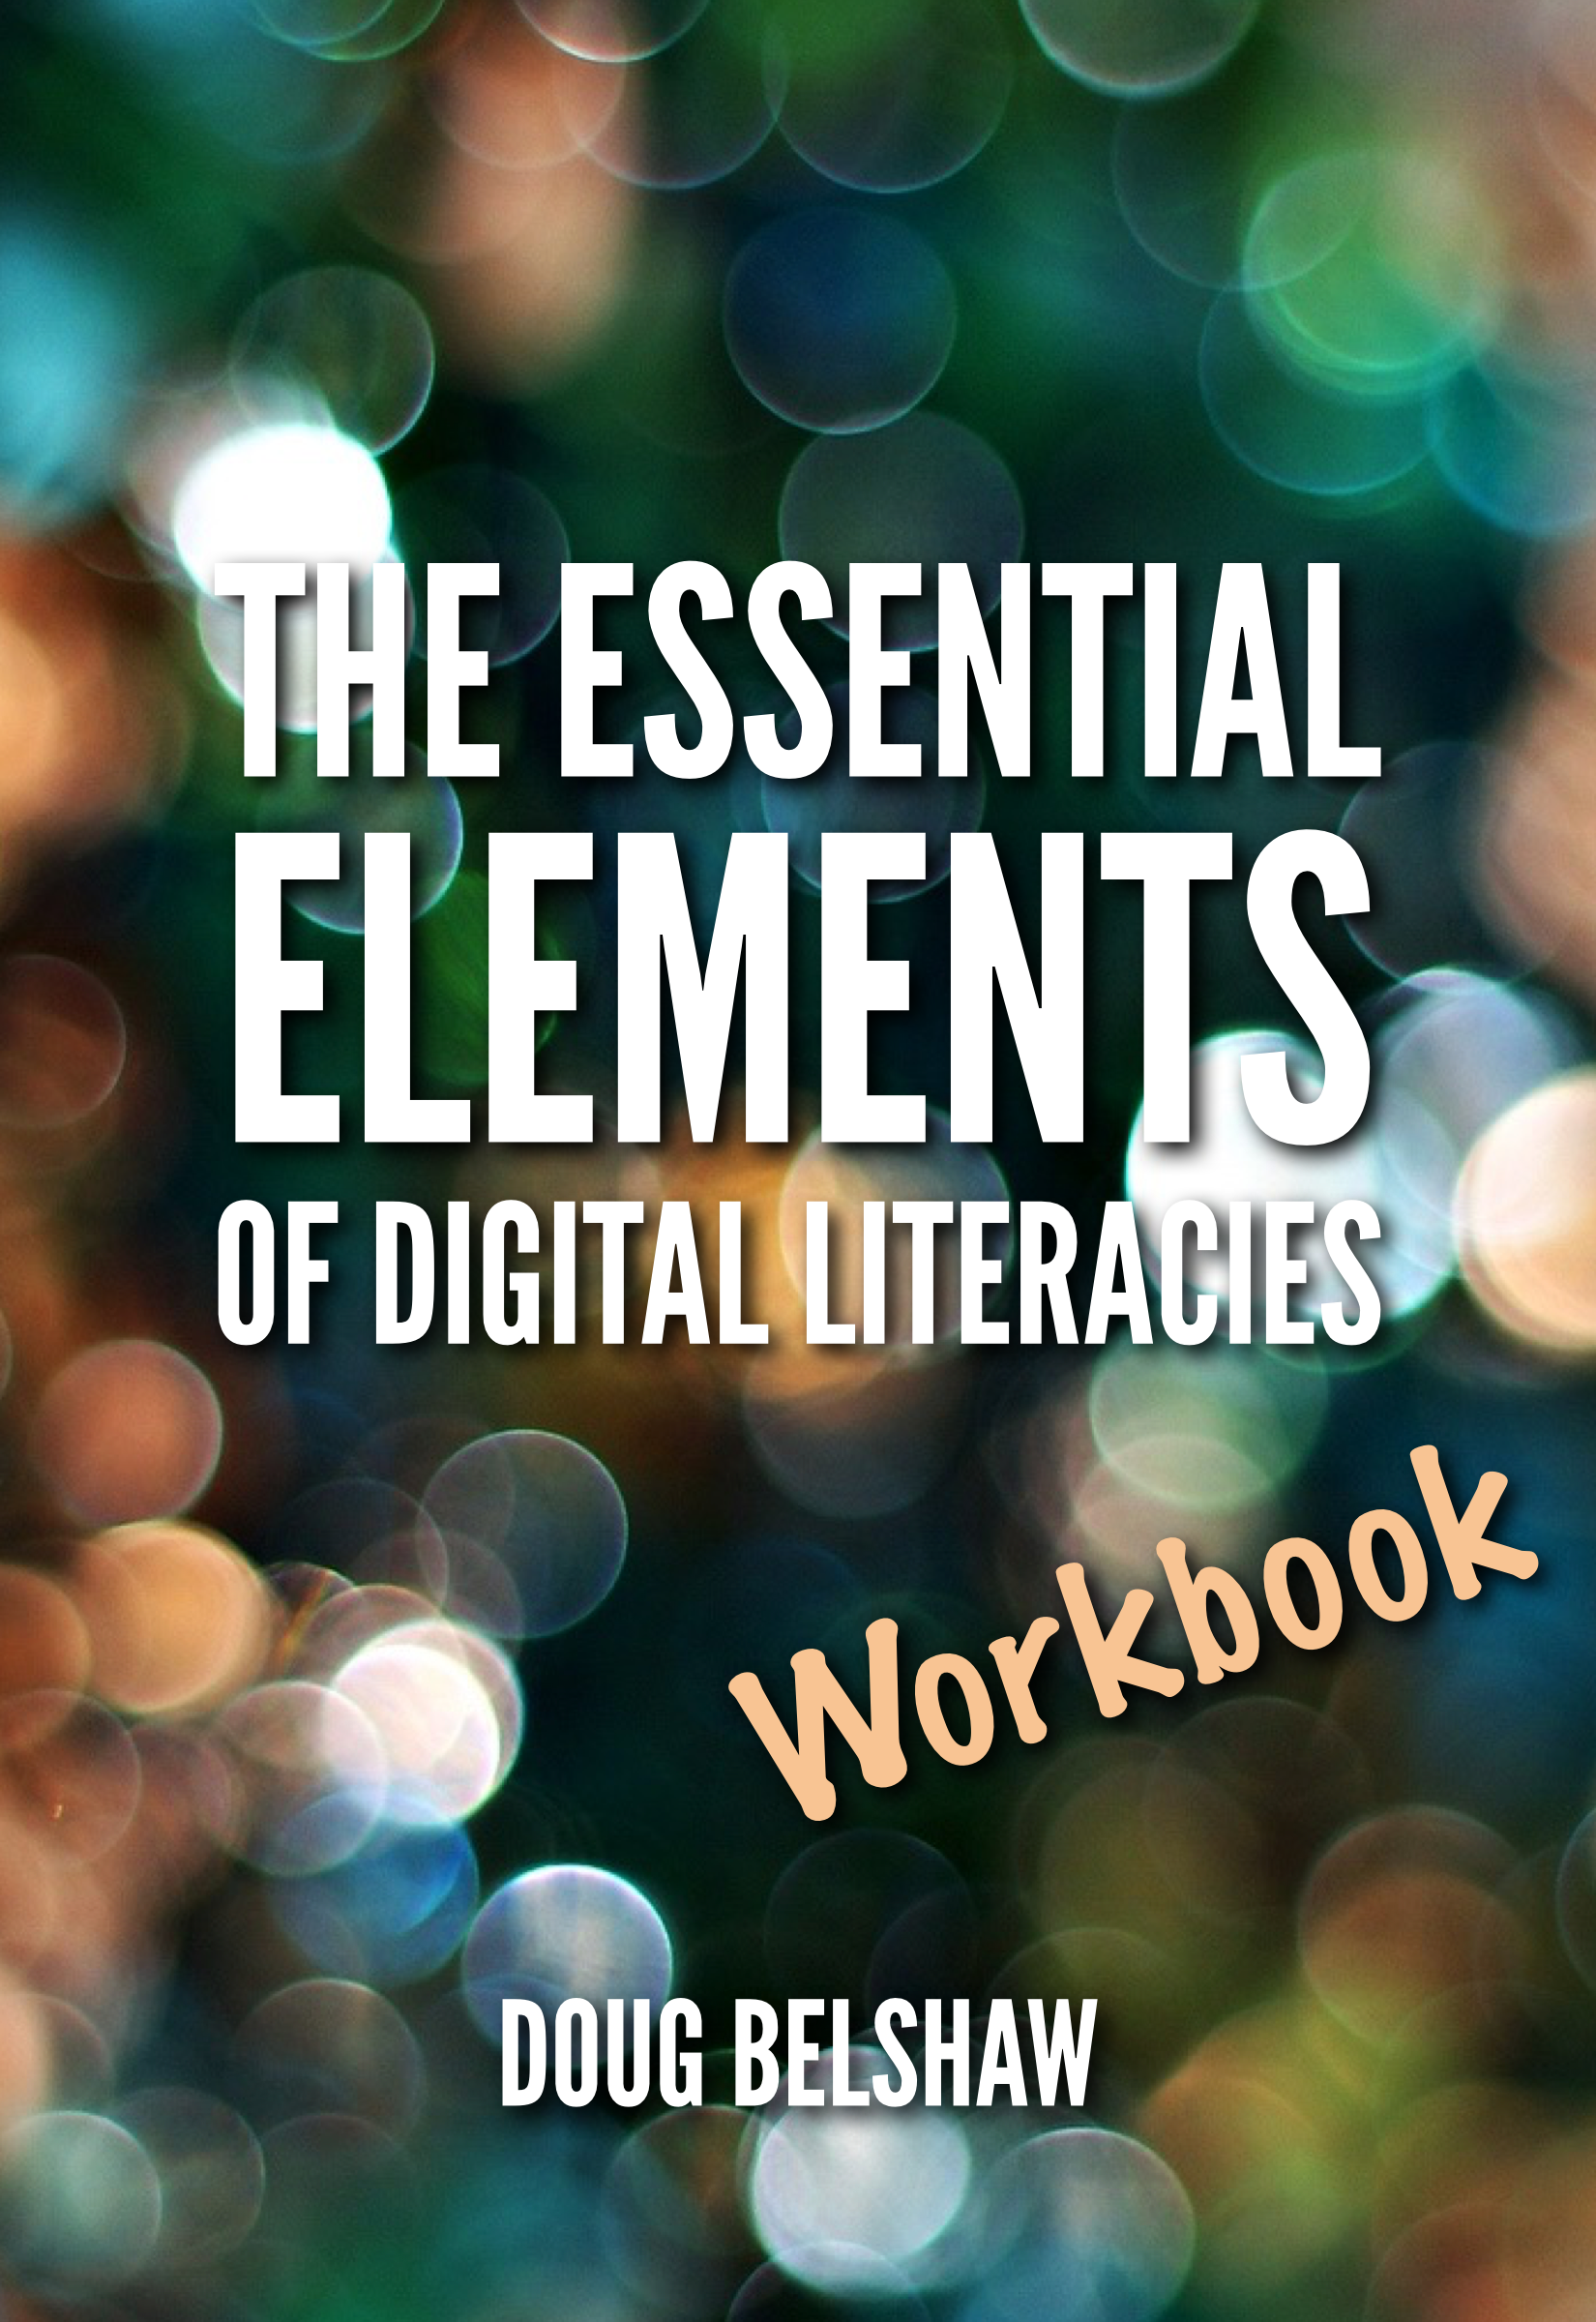 The Essential Elements of Digital Literacies: the workbook